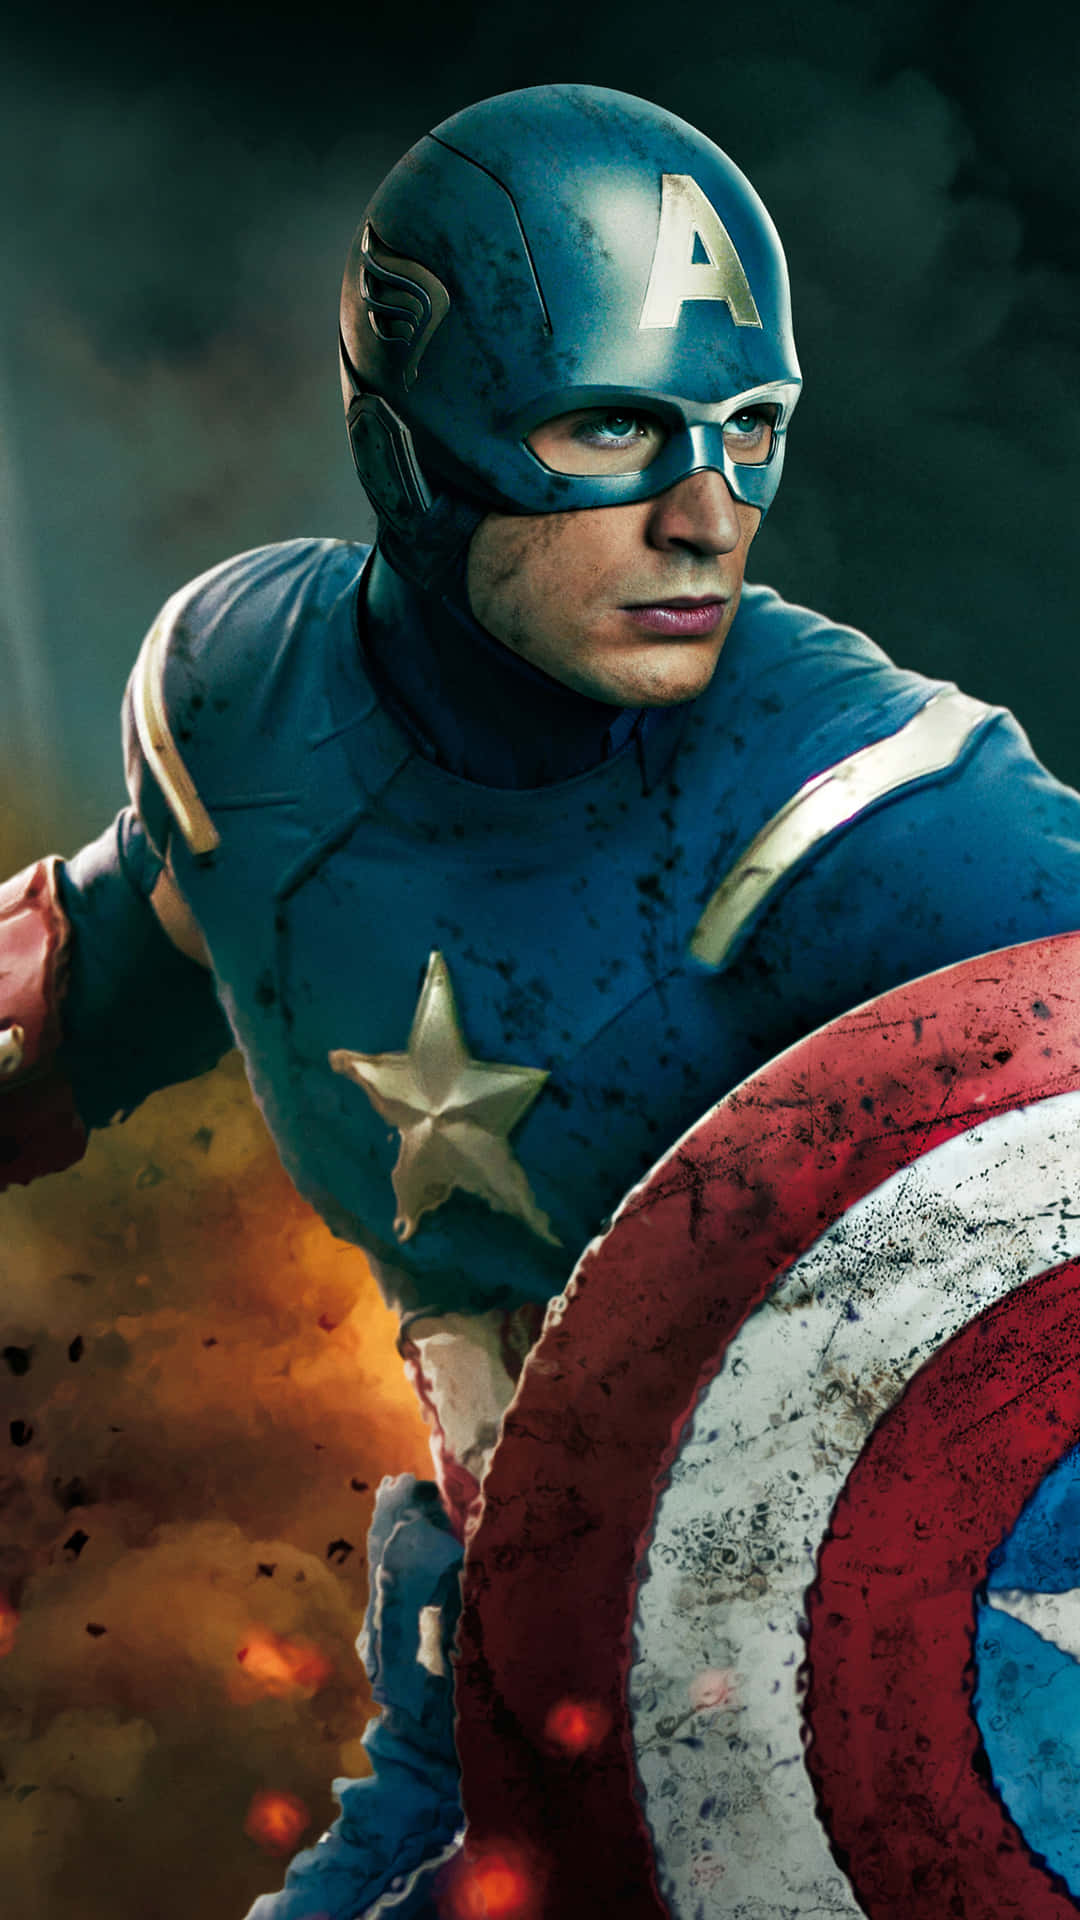 "Stay cool like Captain America!" Wallpaper